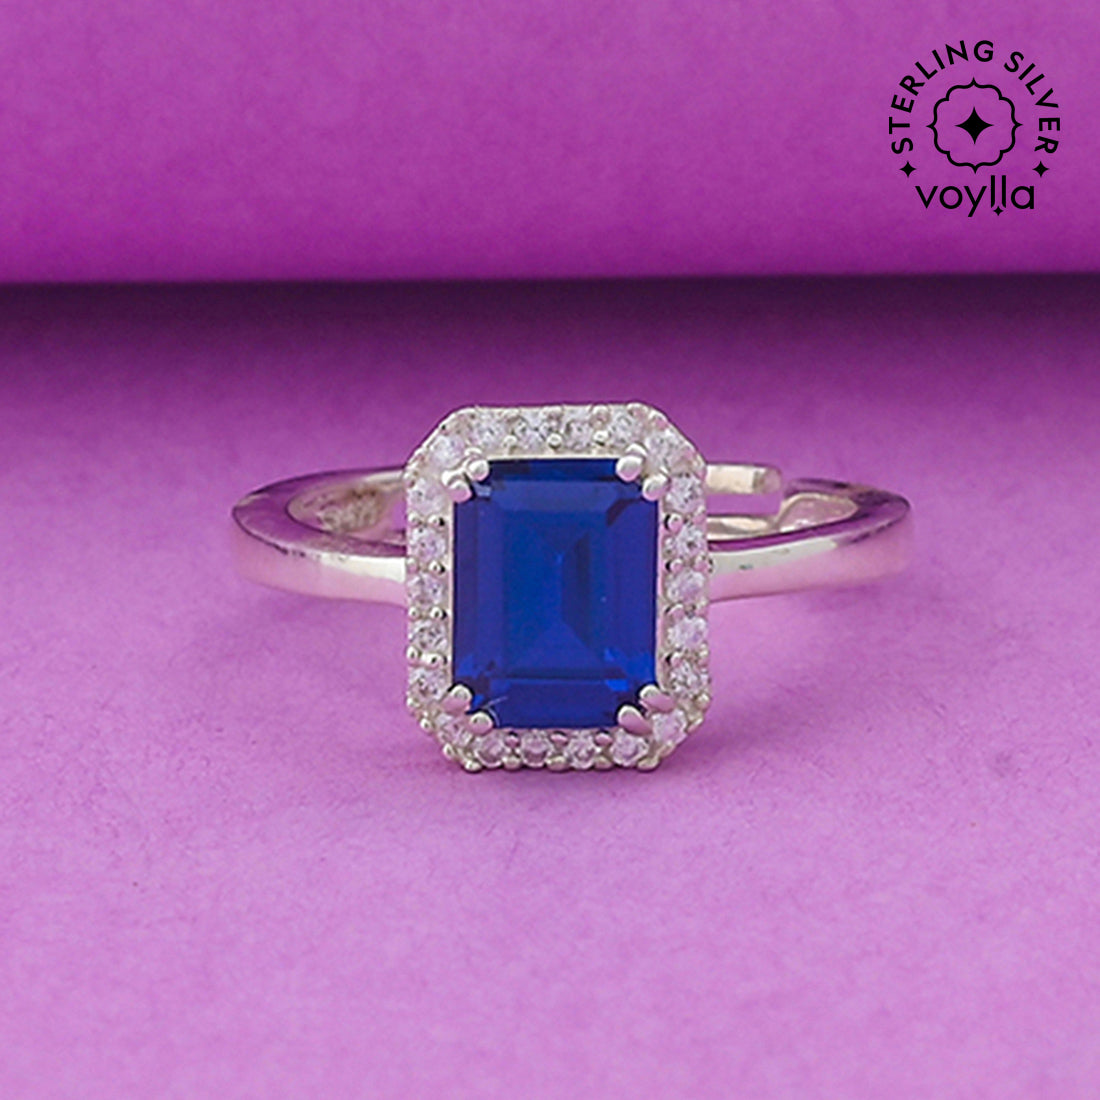 Buy 250+ Diamond And Gemstone Rings Online | BlueStone.com - India's #1  Online Jewellery Brand